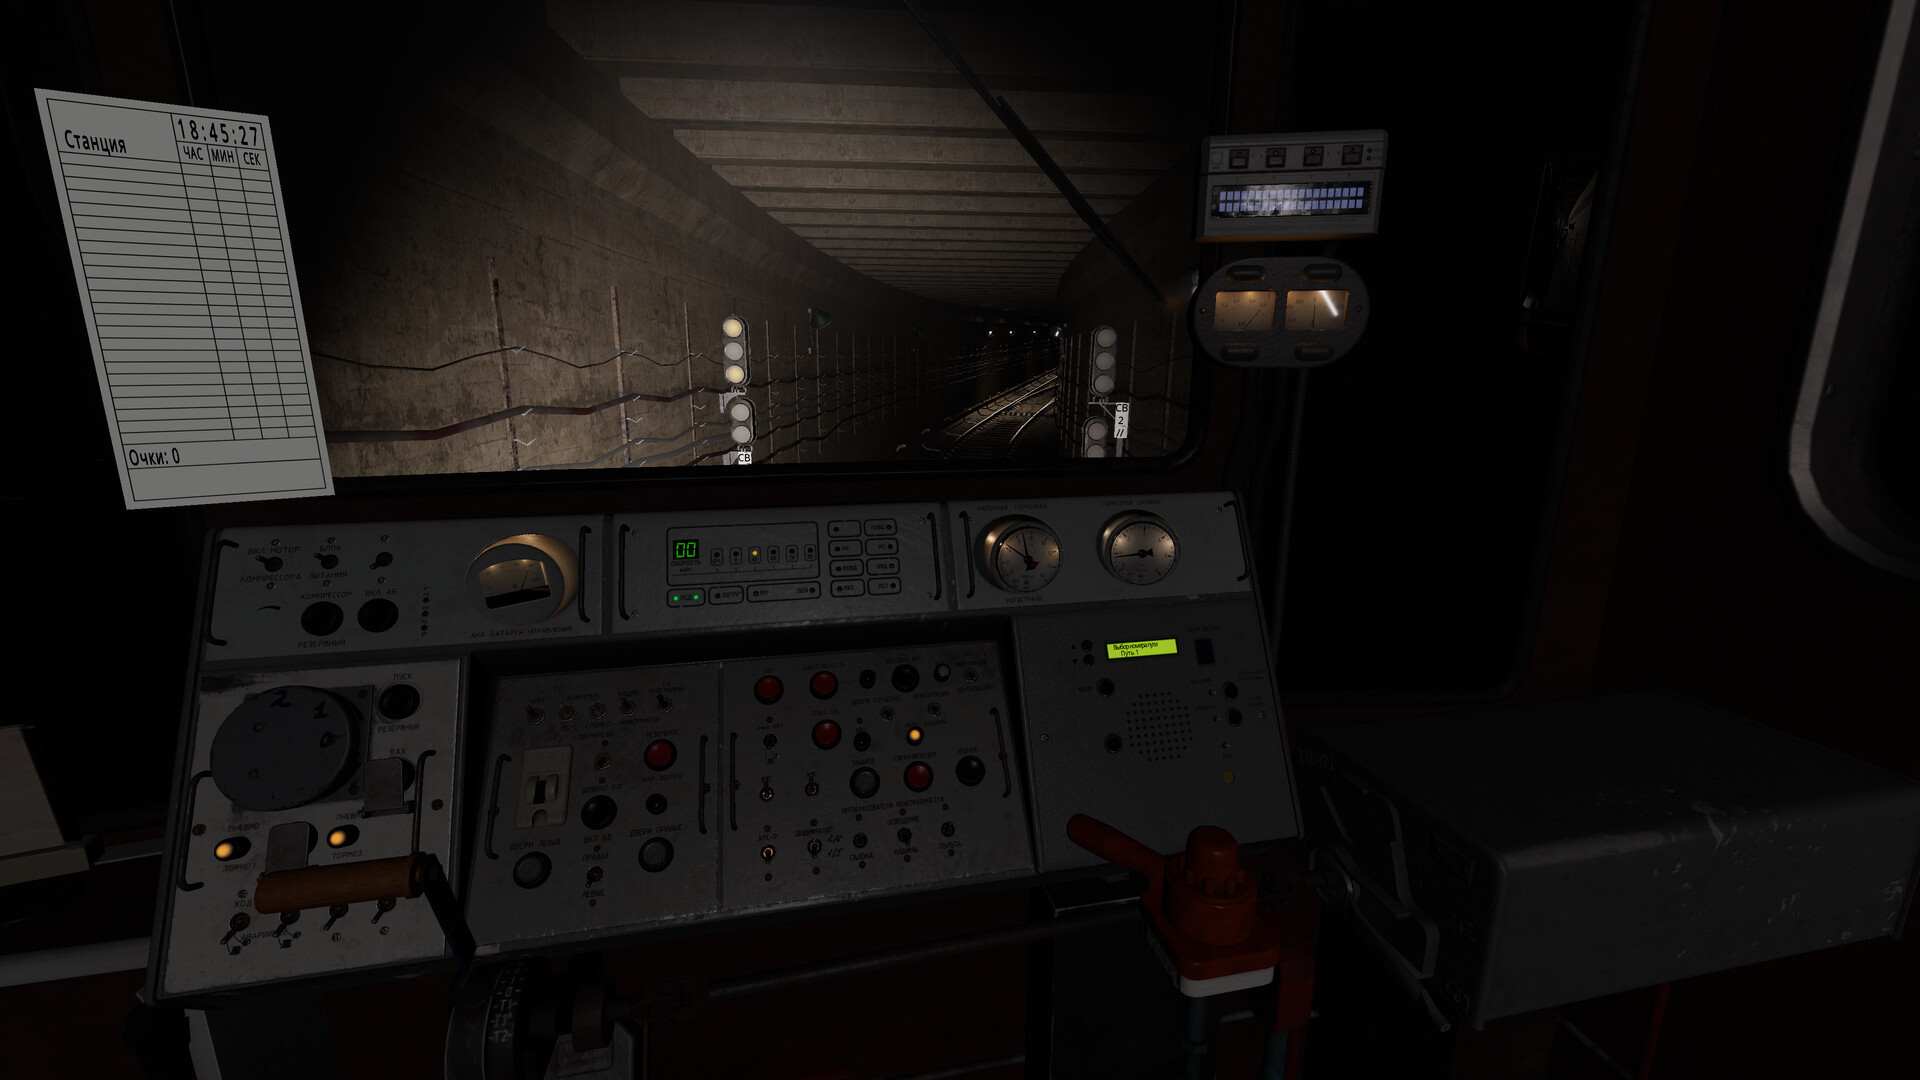 Metro Simulator 2 Free Download